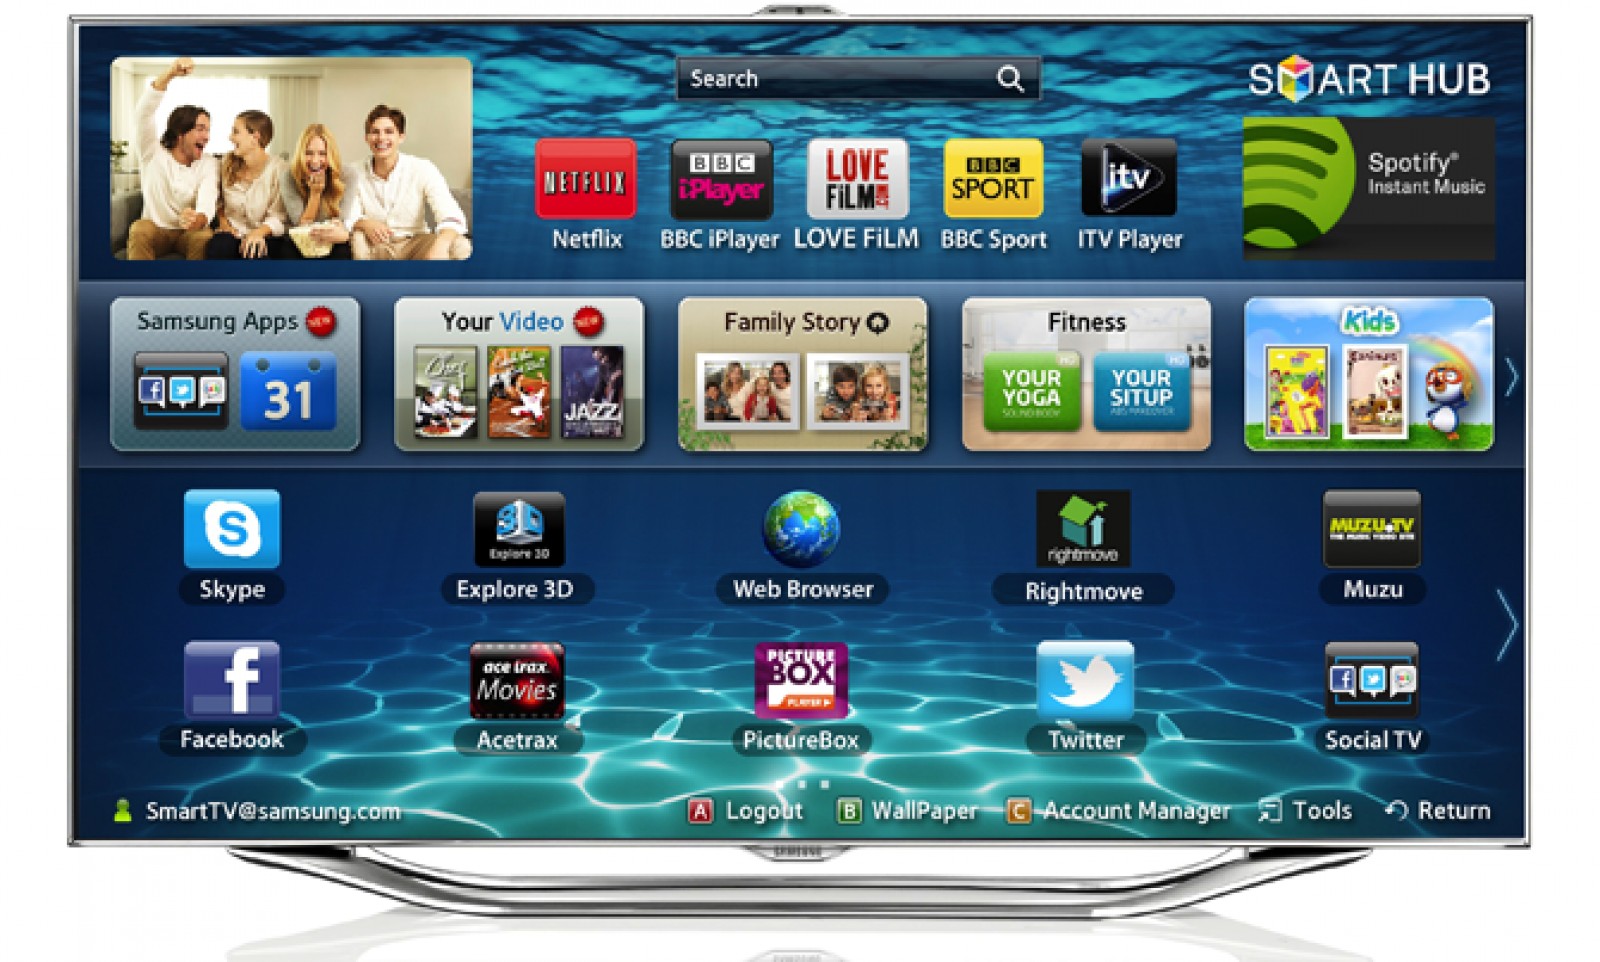 Can i put a screensaver on my samsung smart tv Samsung Lg Smart Tv